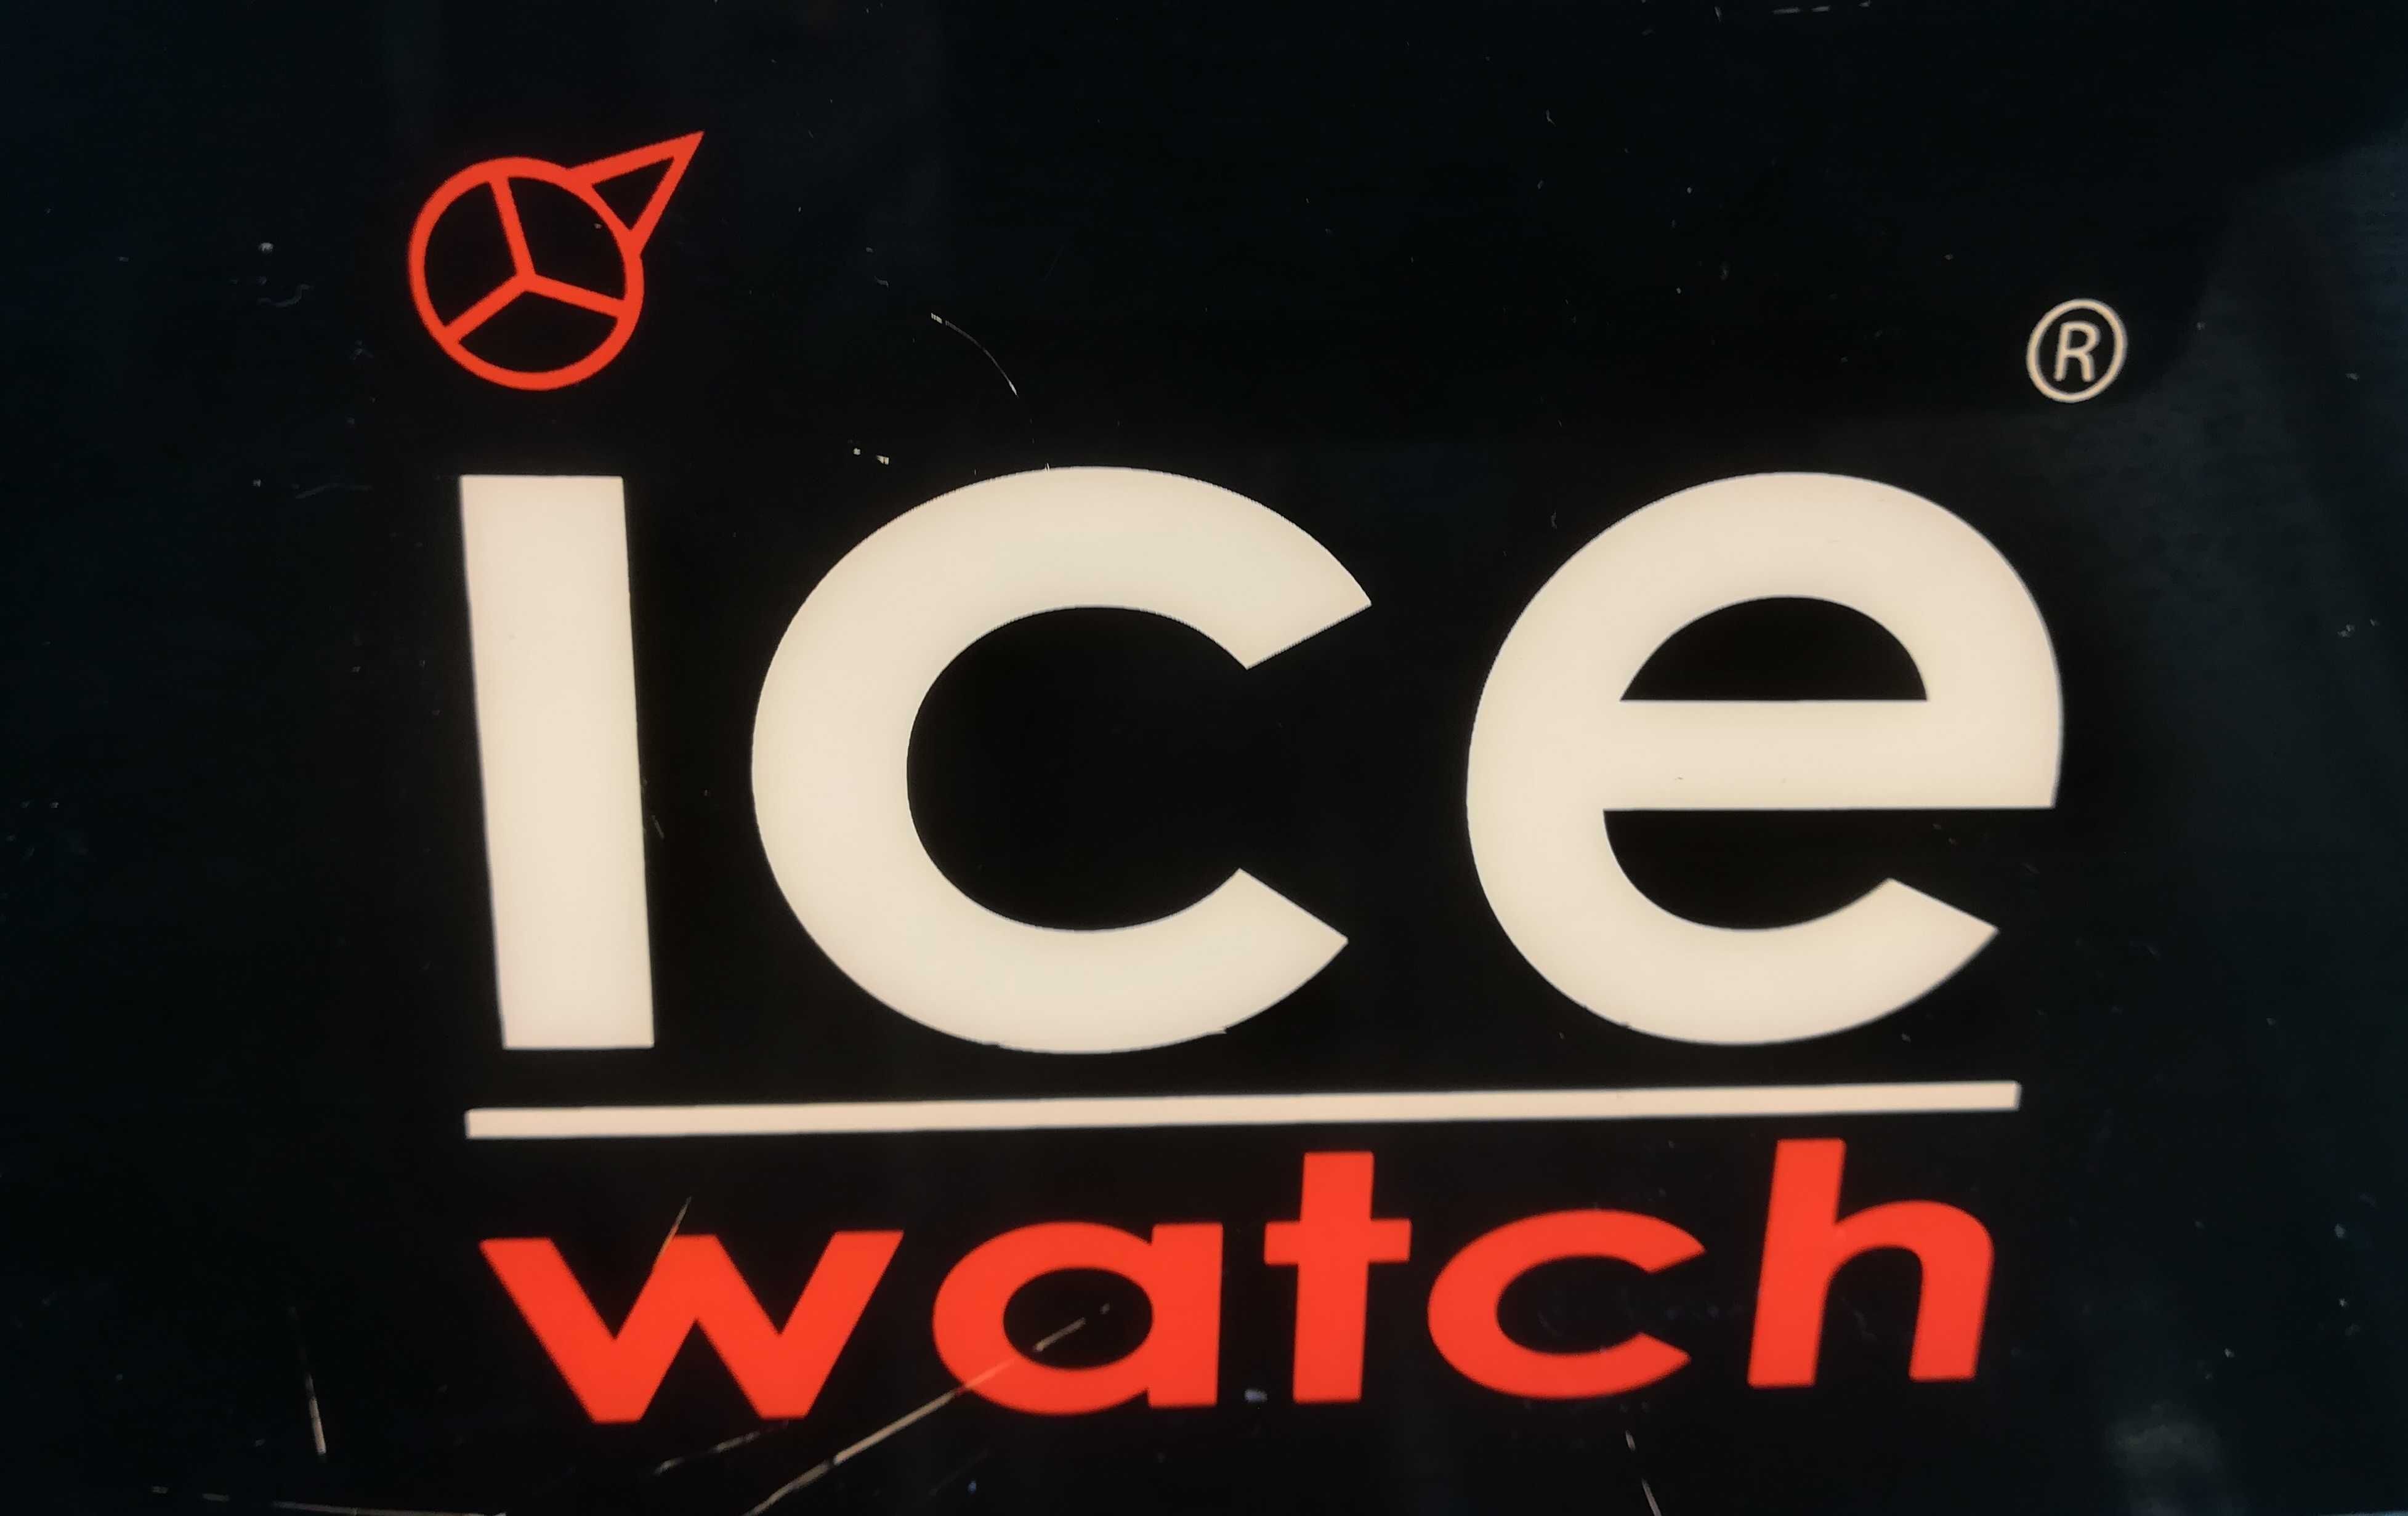 Светеща рекламна кутия ICE watch